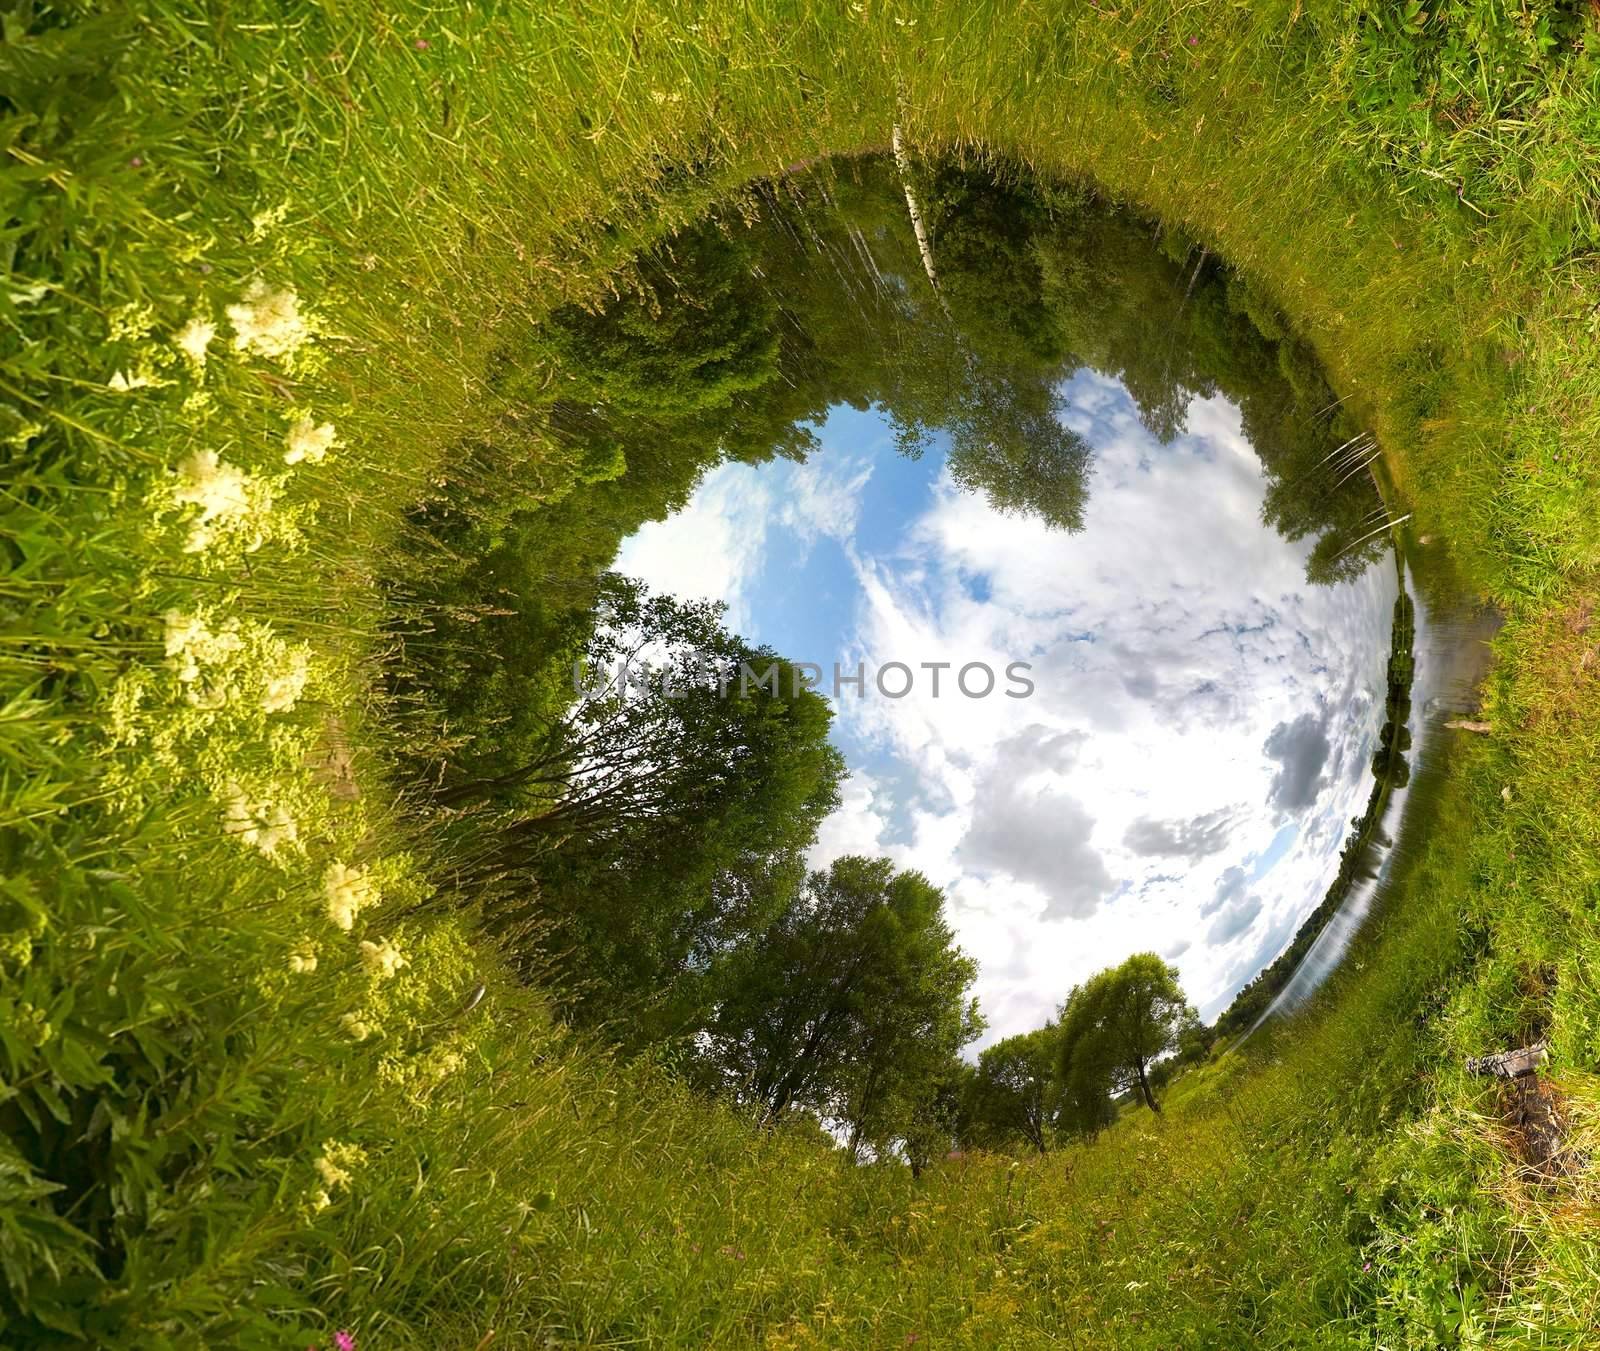 Sphere world by liseykina